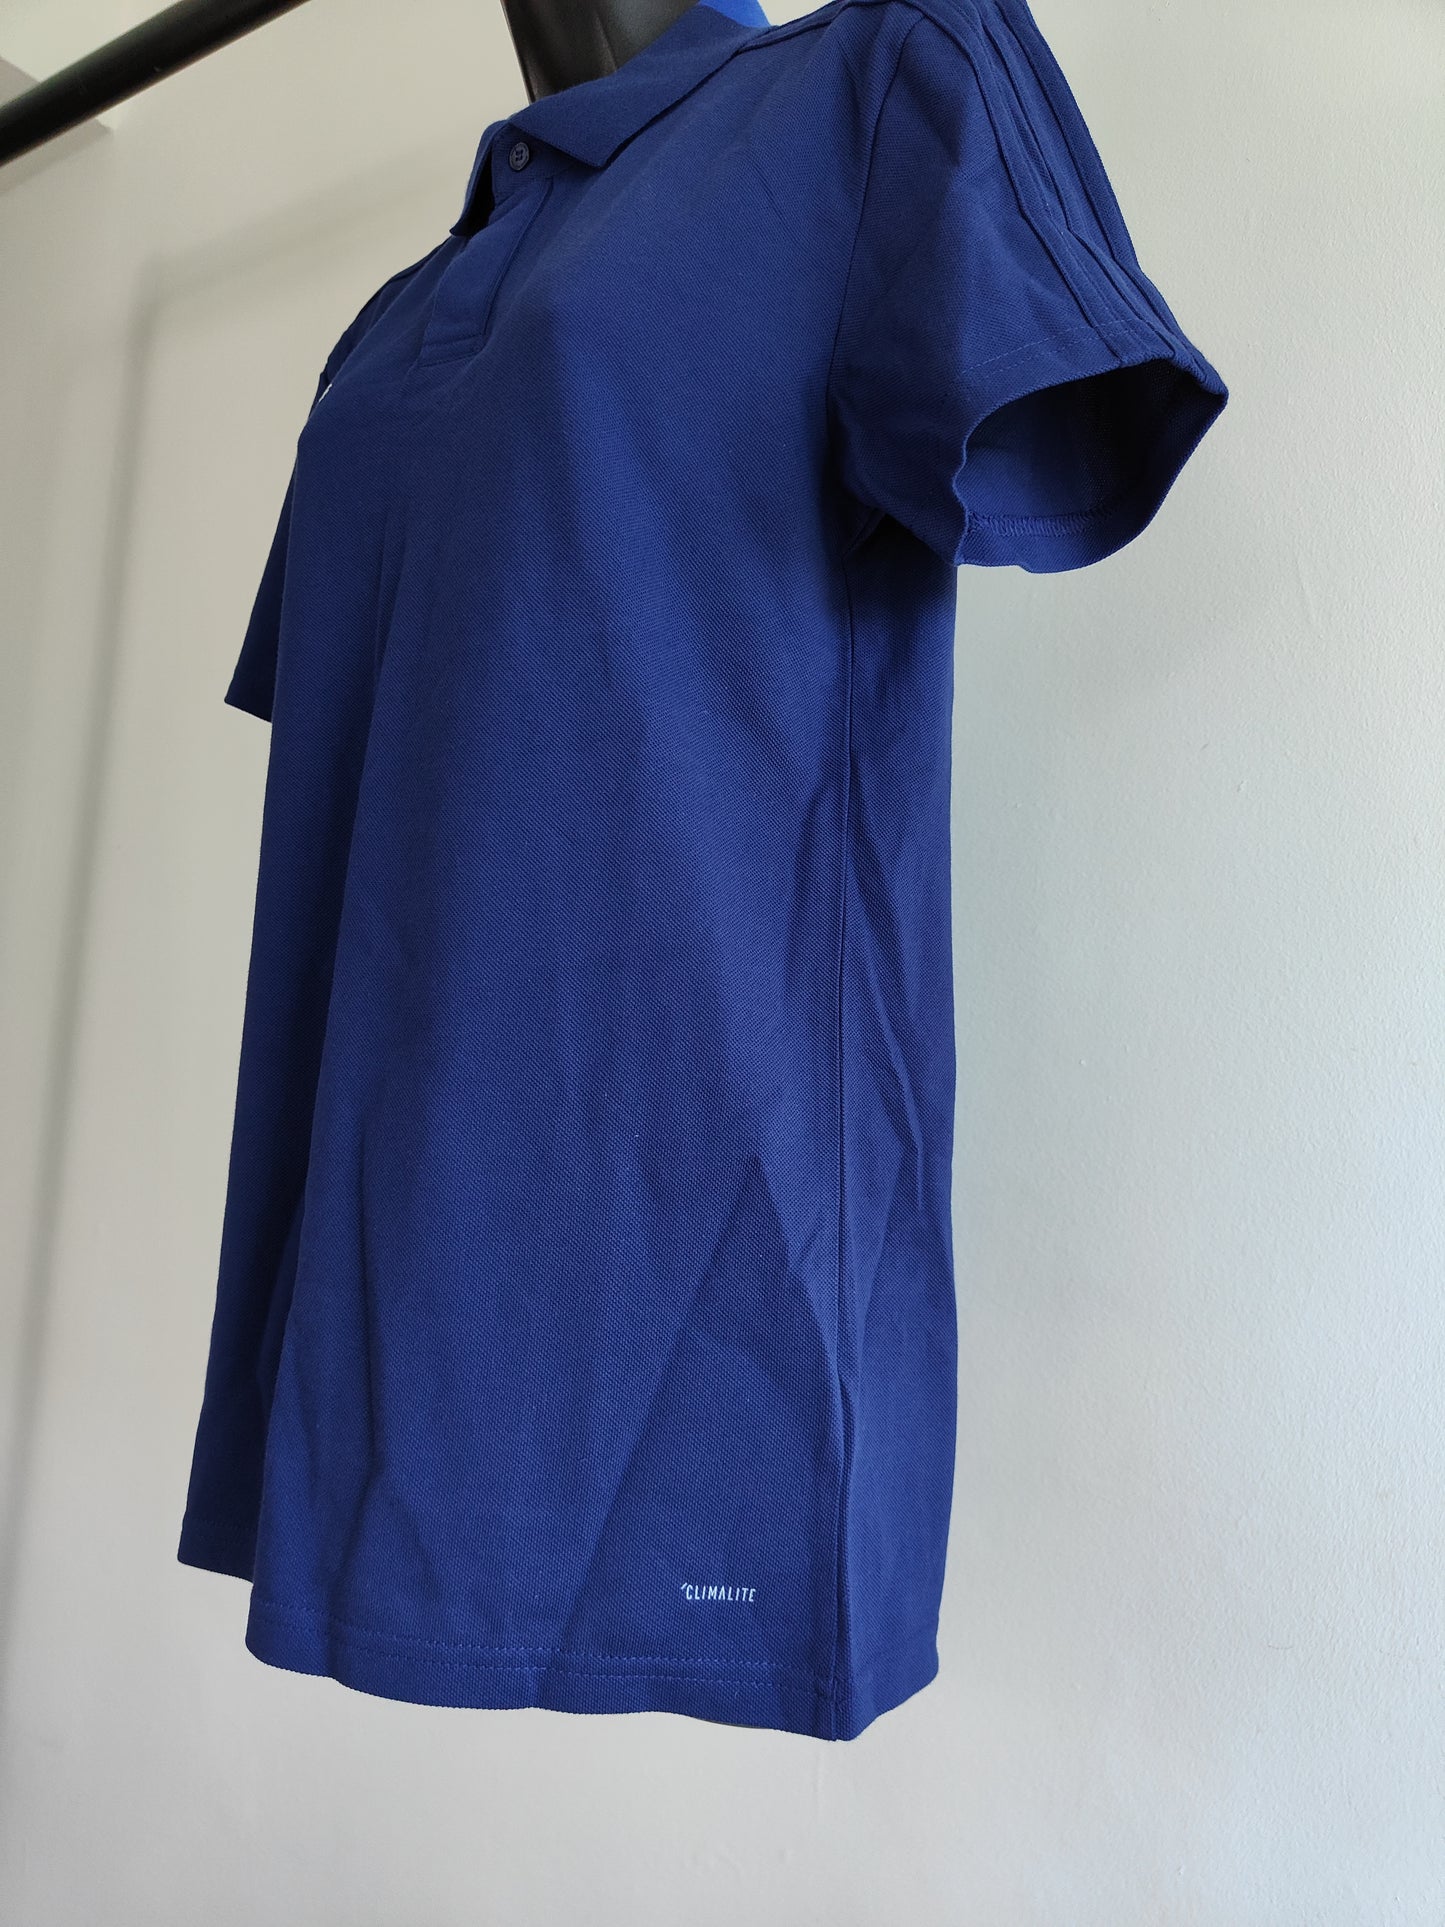 Women's Polo Shirt in Navy Blue S